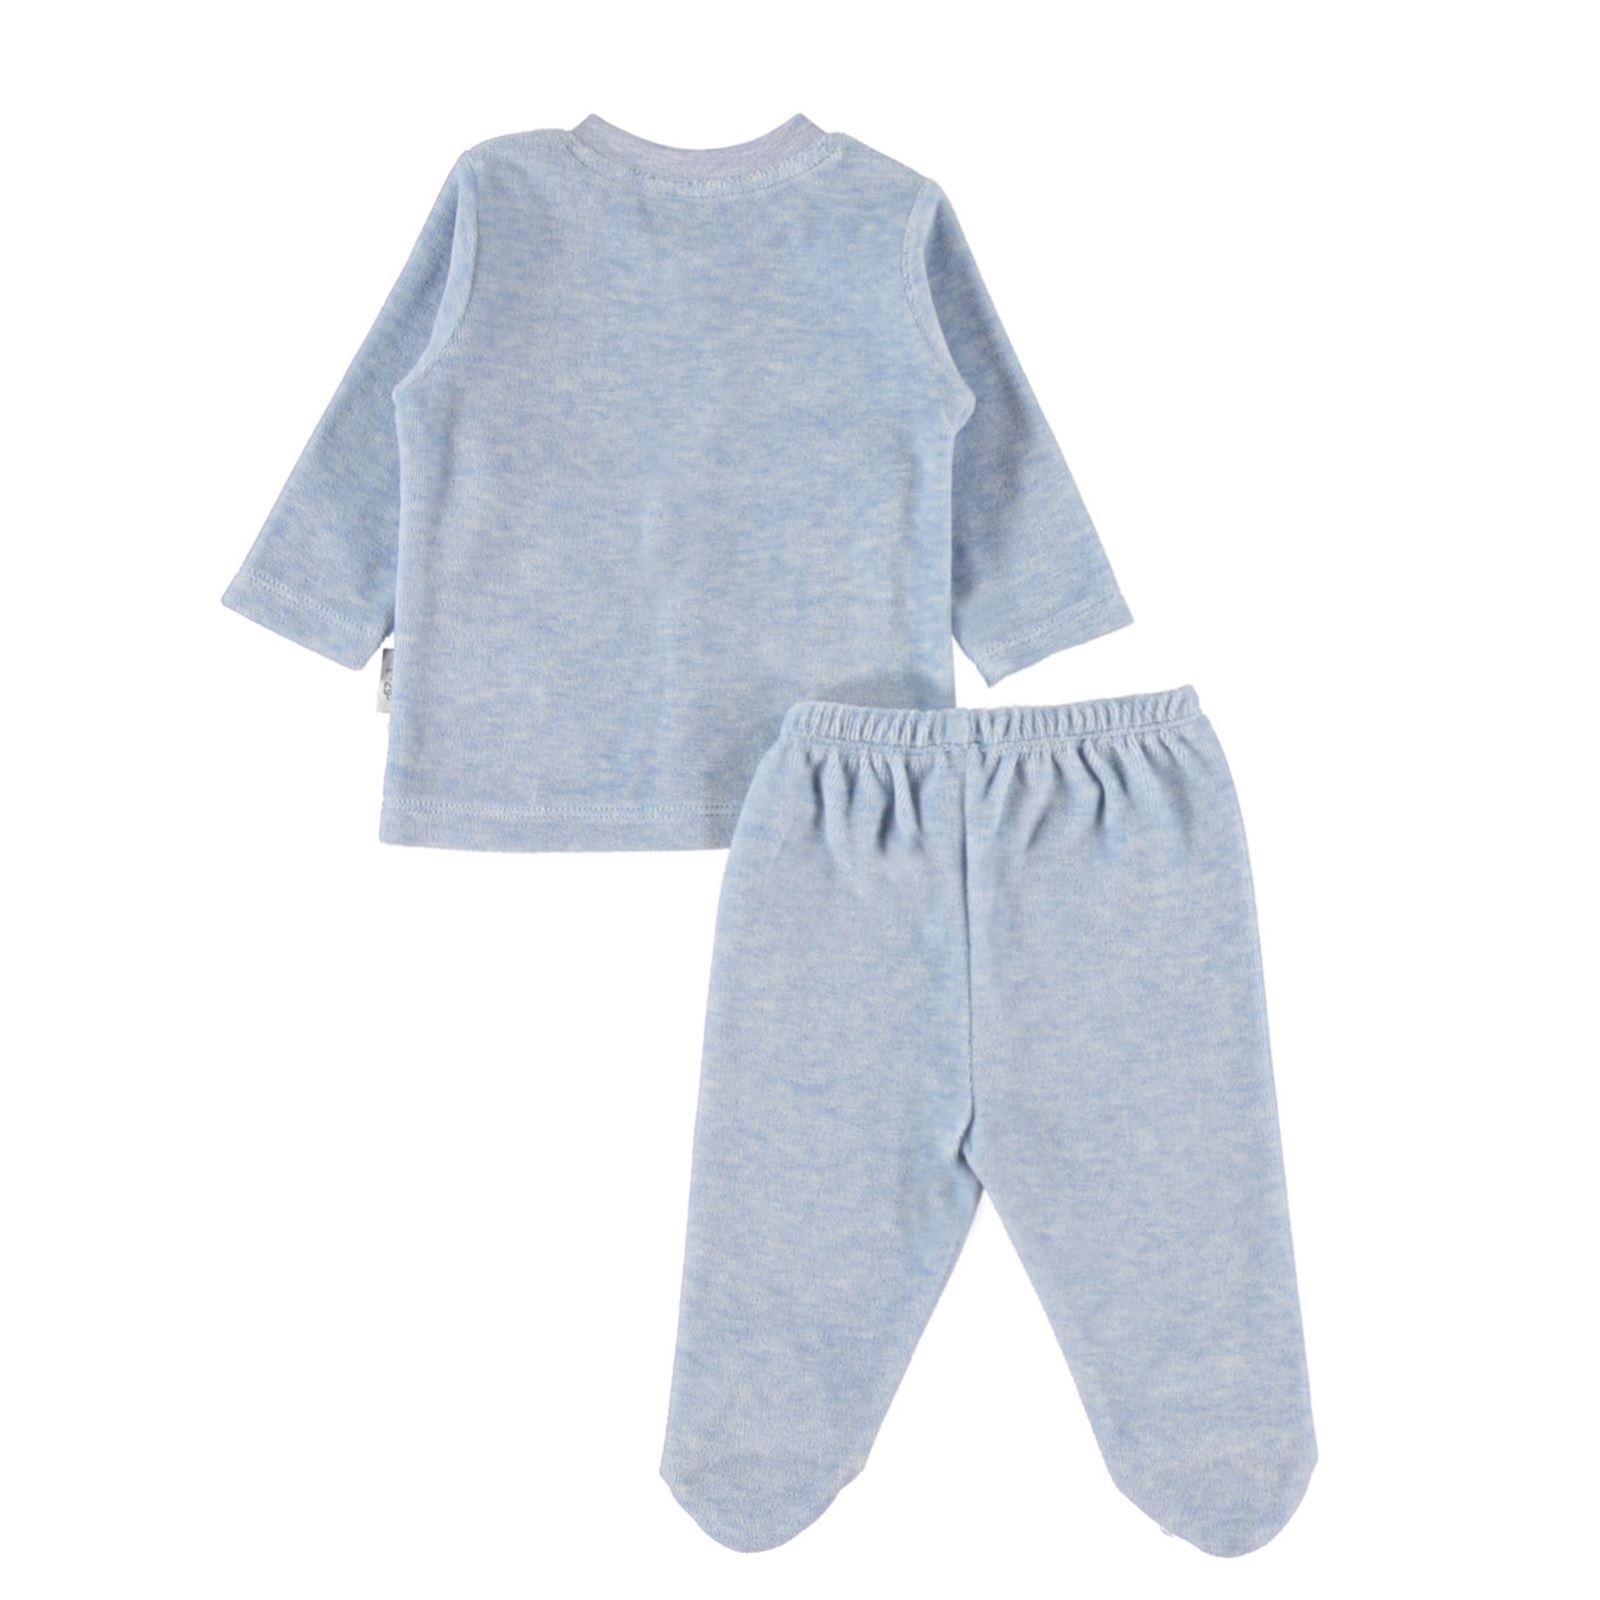 Kujju Erkek Bebek Pijama Takımı 3-9 Ay Mavi